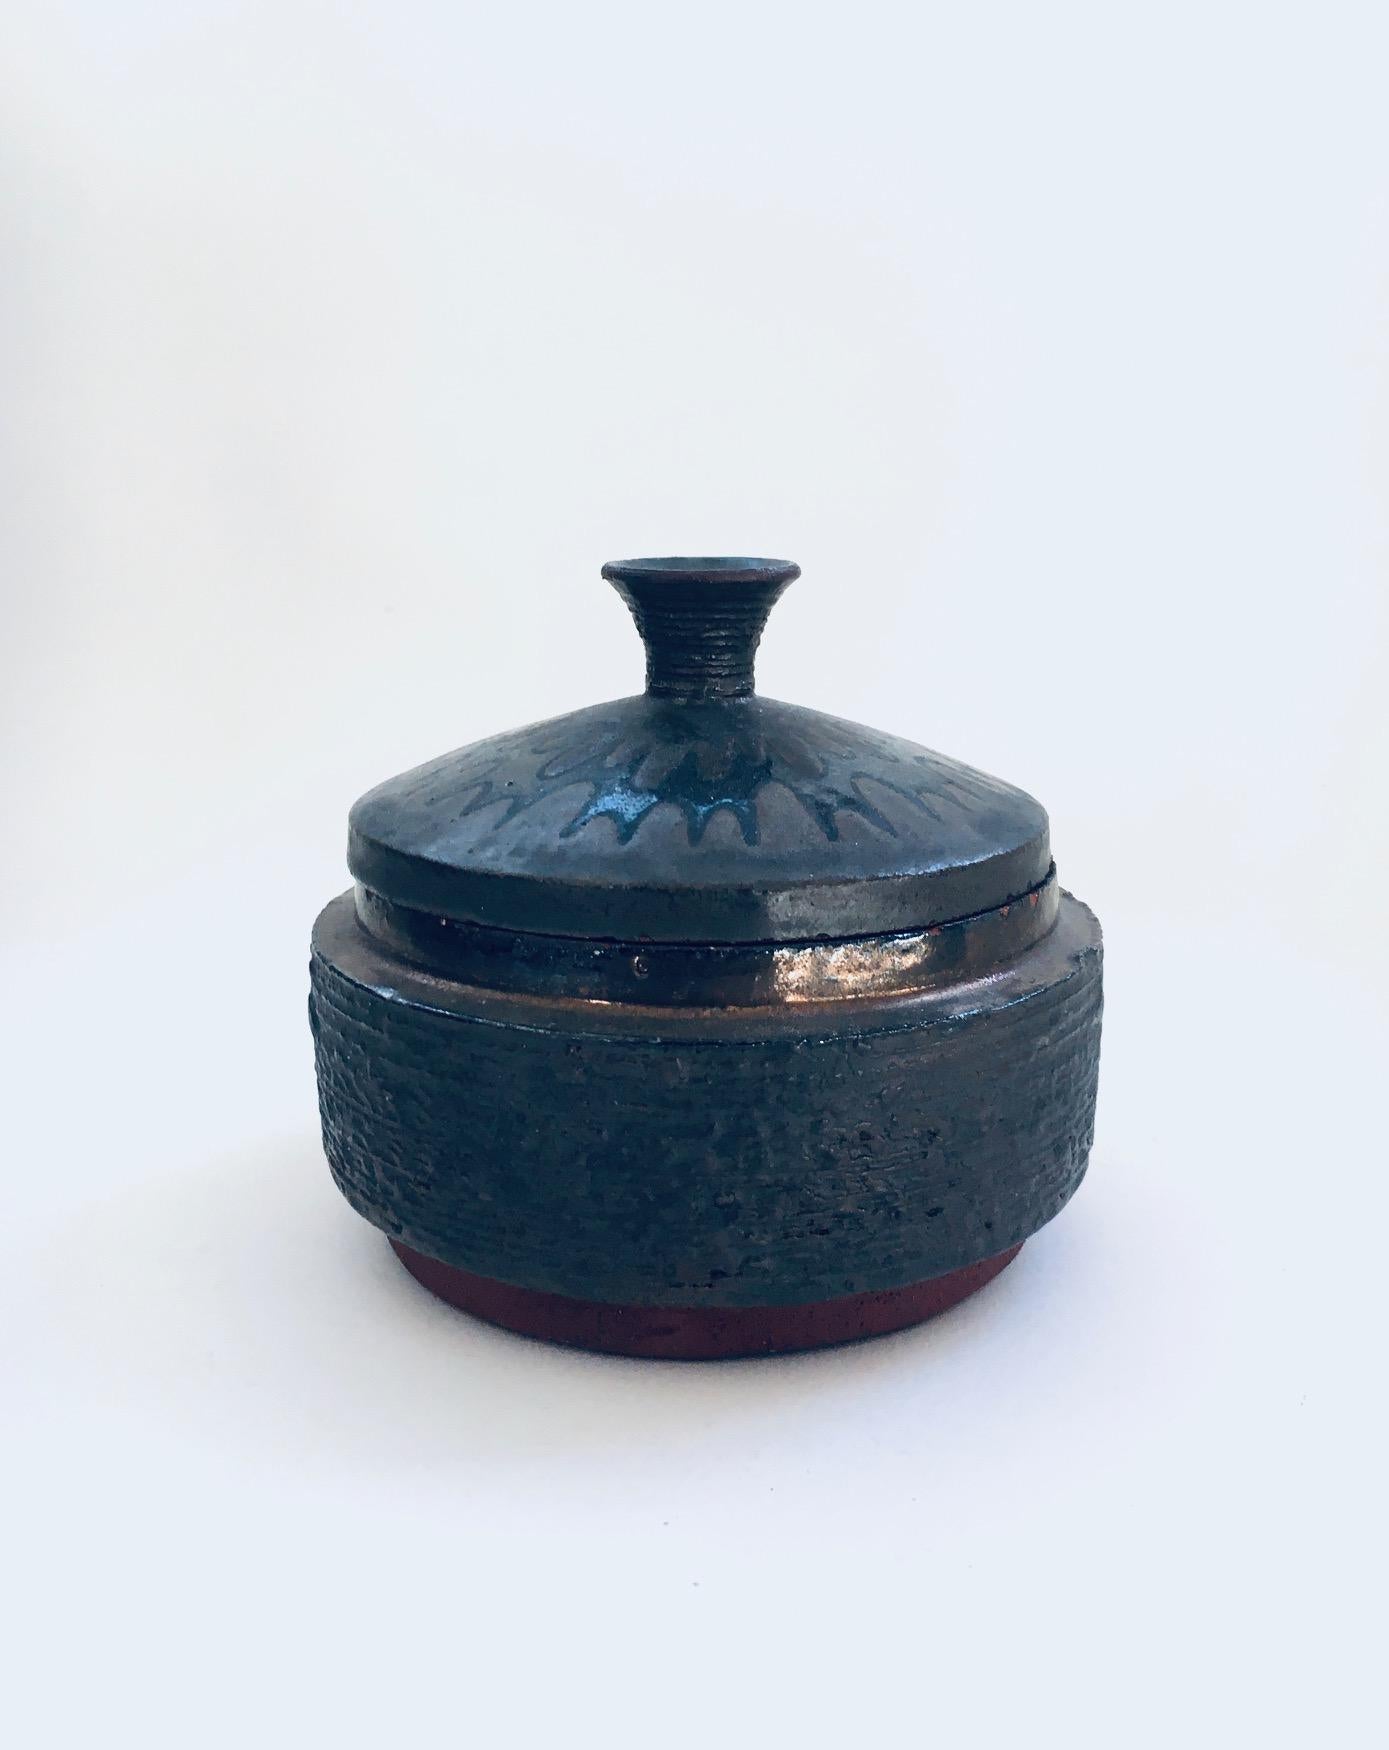 Brutalist Vintage Art Pottery Studio Perignem Amphora Lidded Bowl, 1960's Belgium